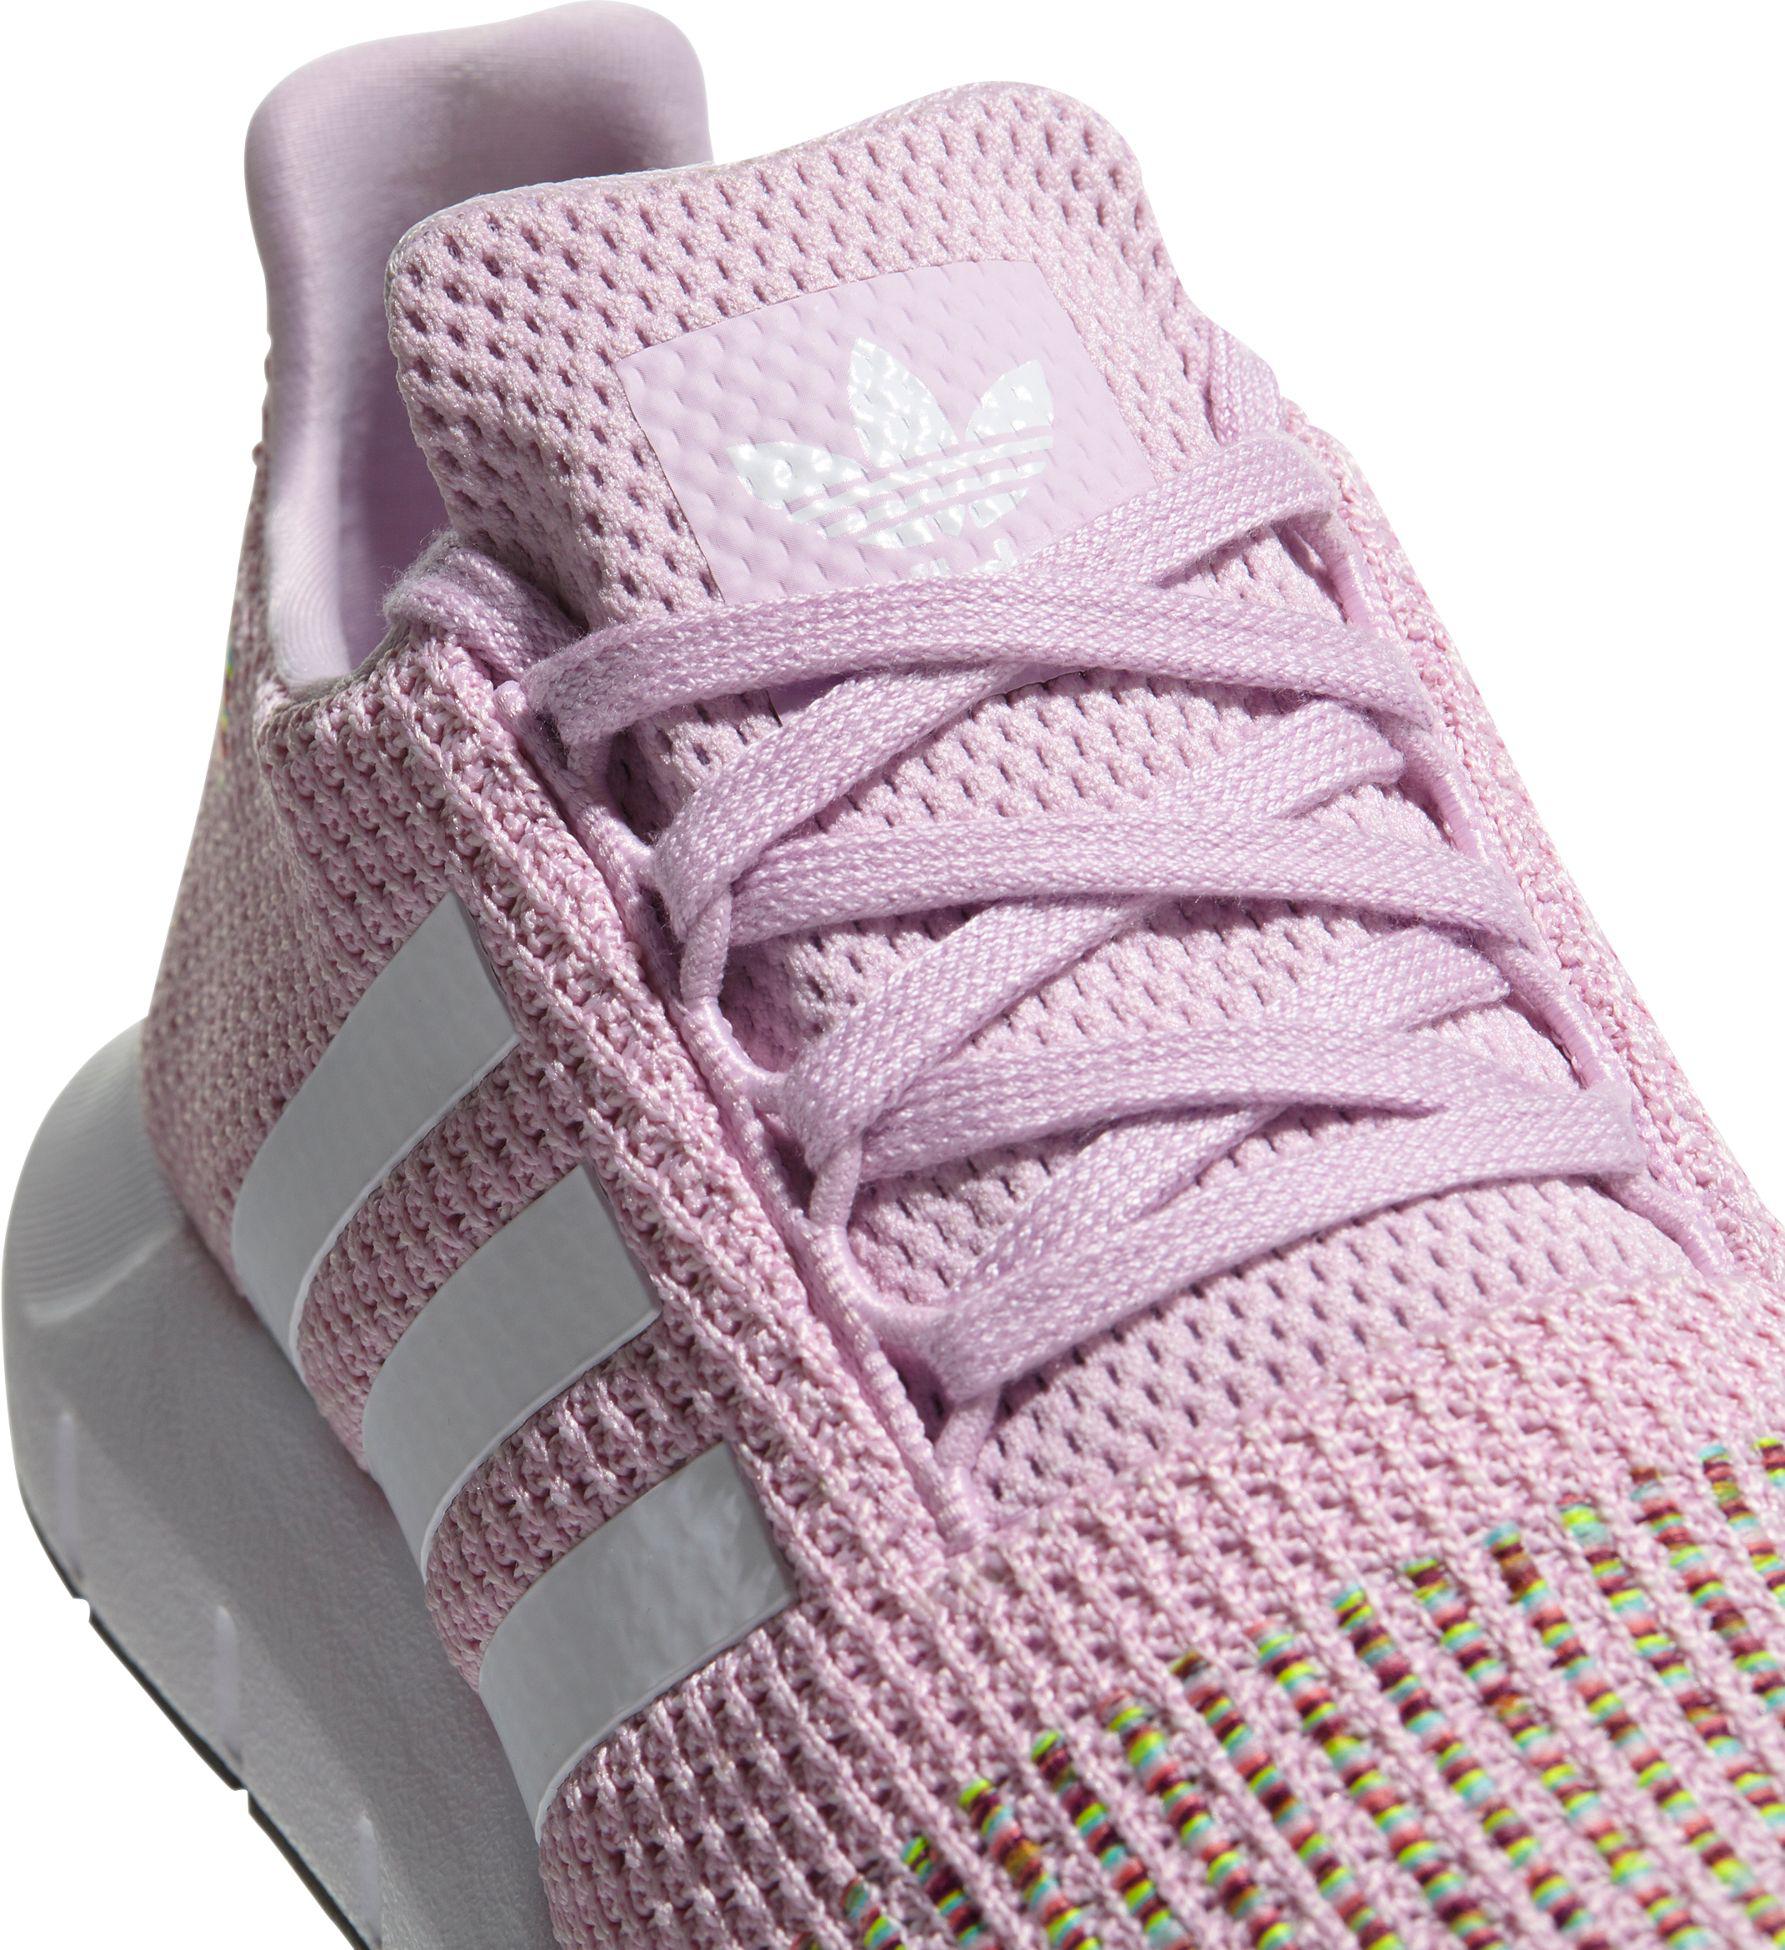 adidas swift run aero pink